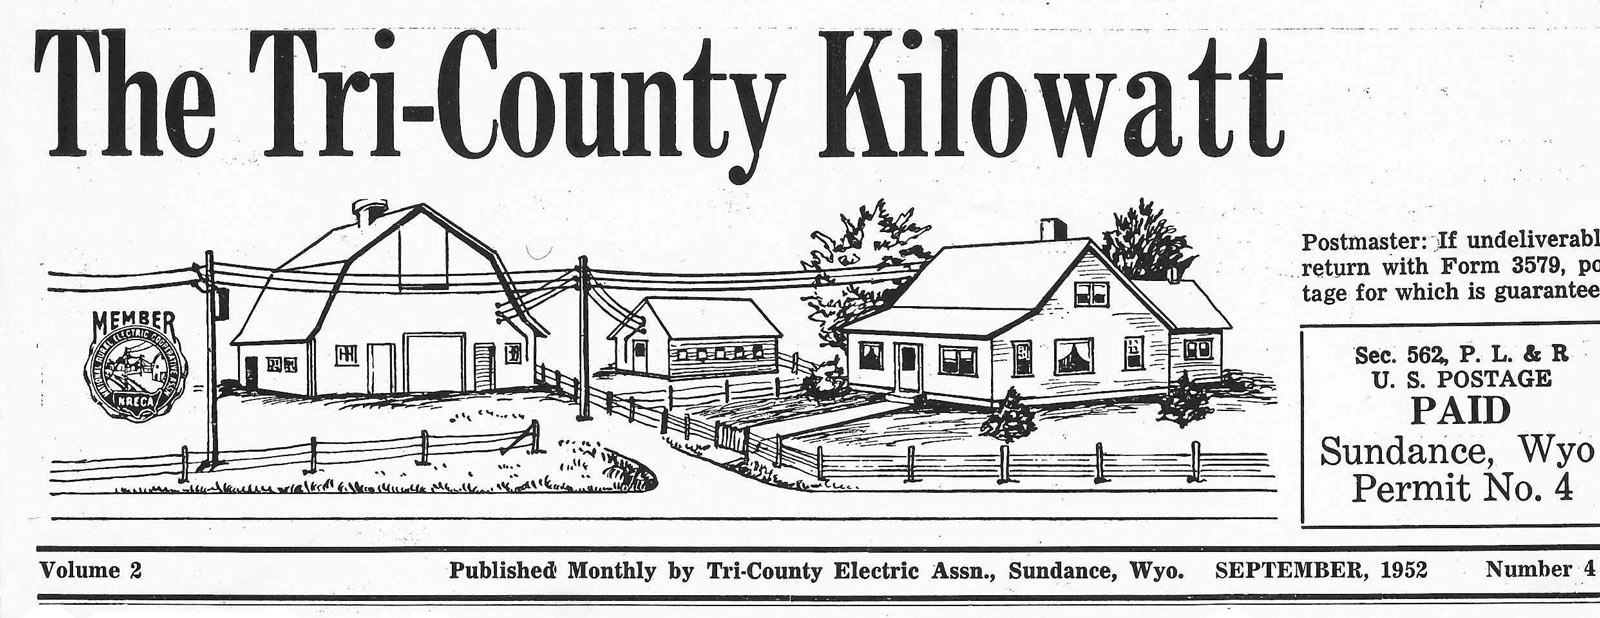 Tri-County Electric Association (TCEA)